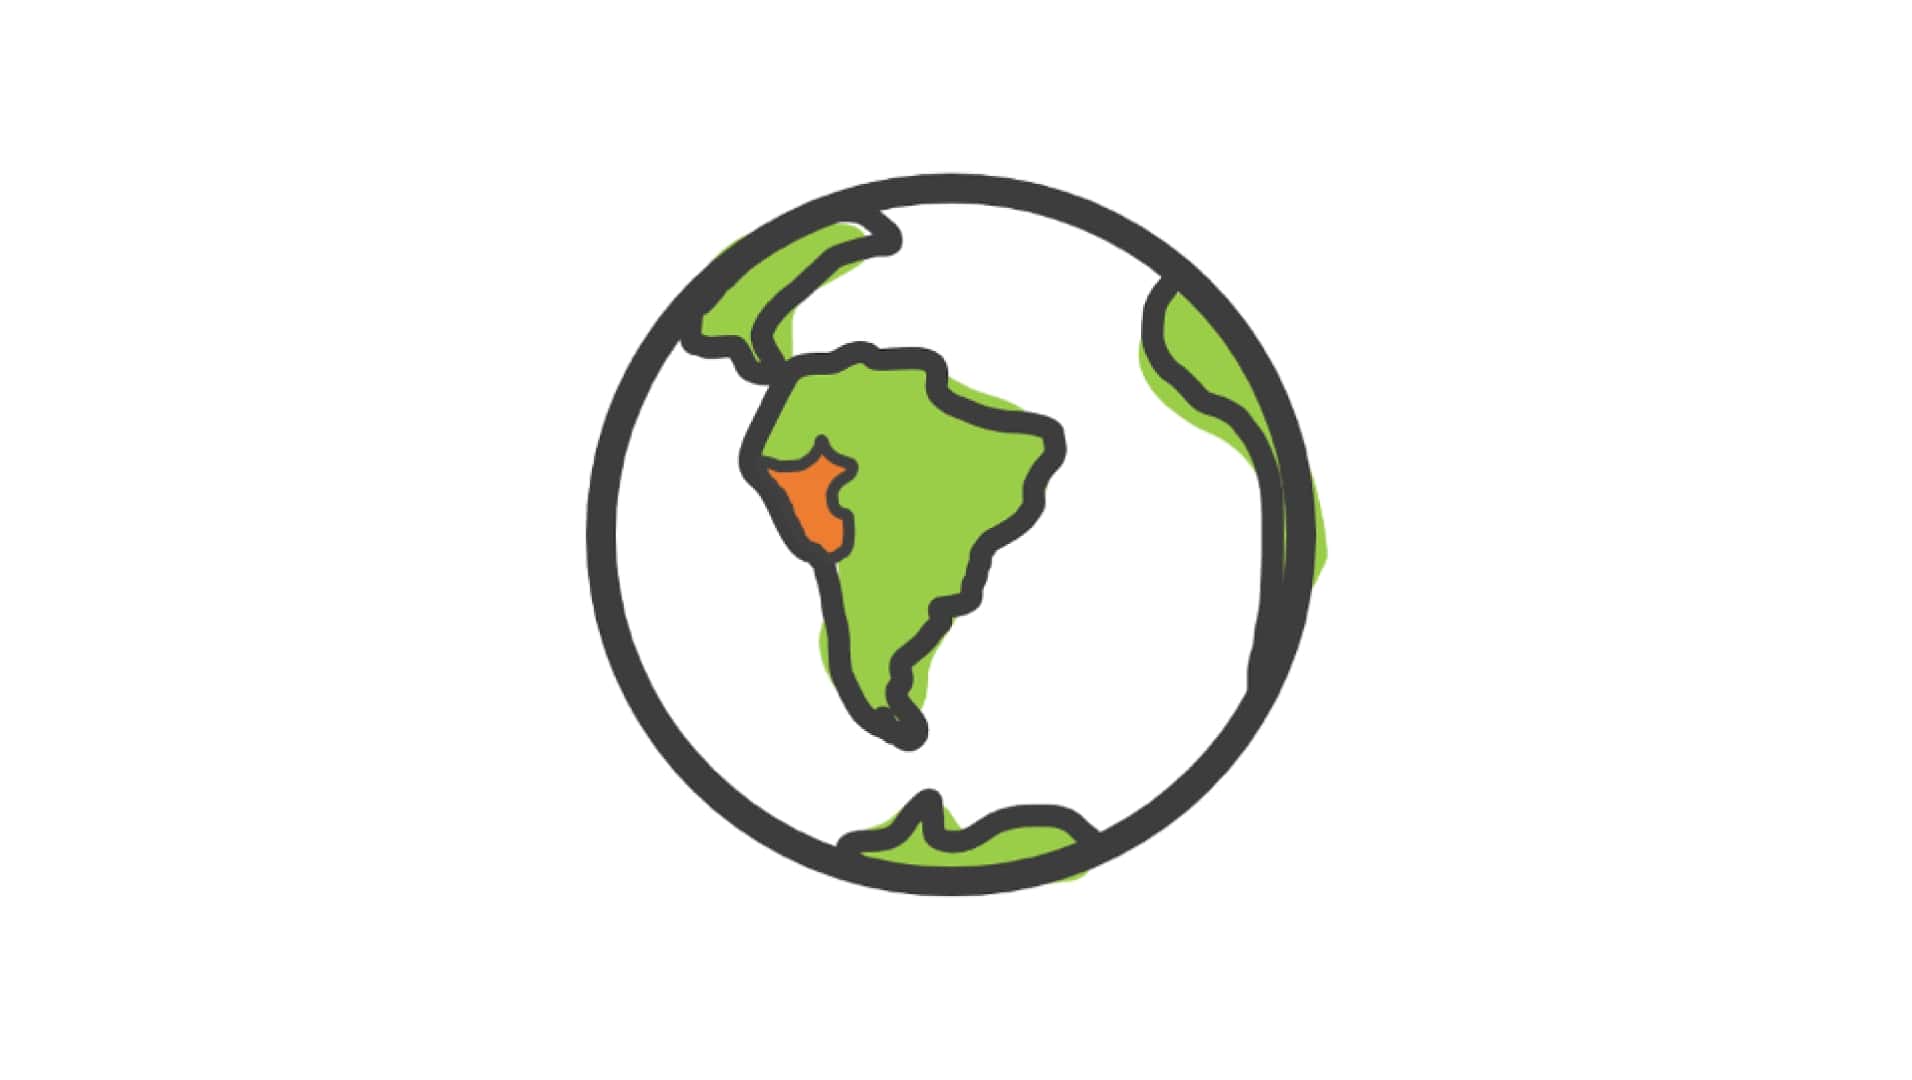 Treeapp’s world icon showing Peru